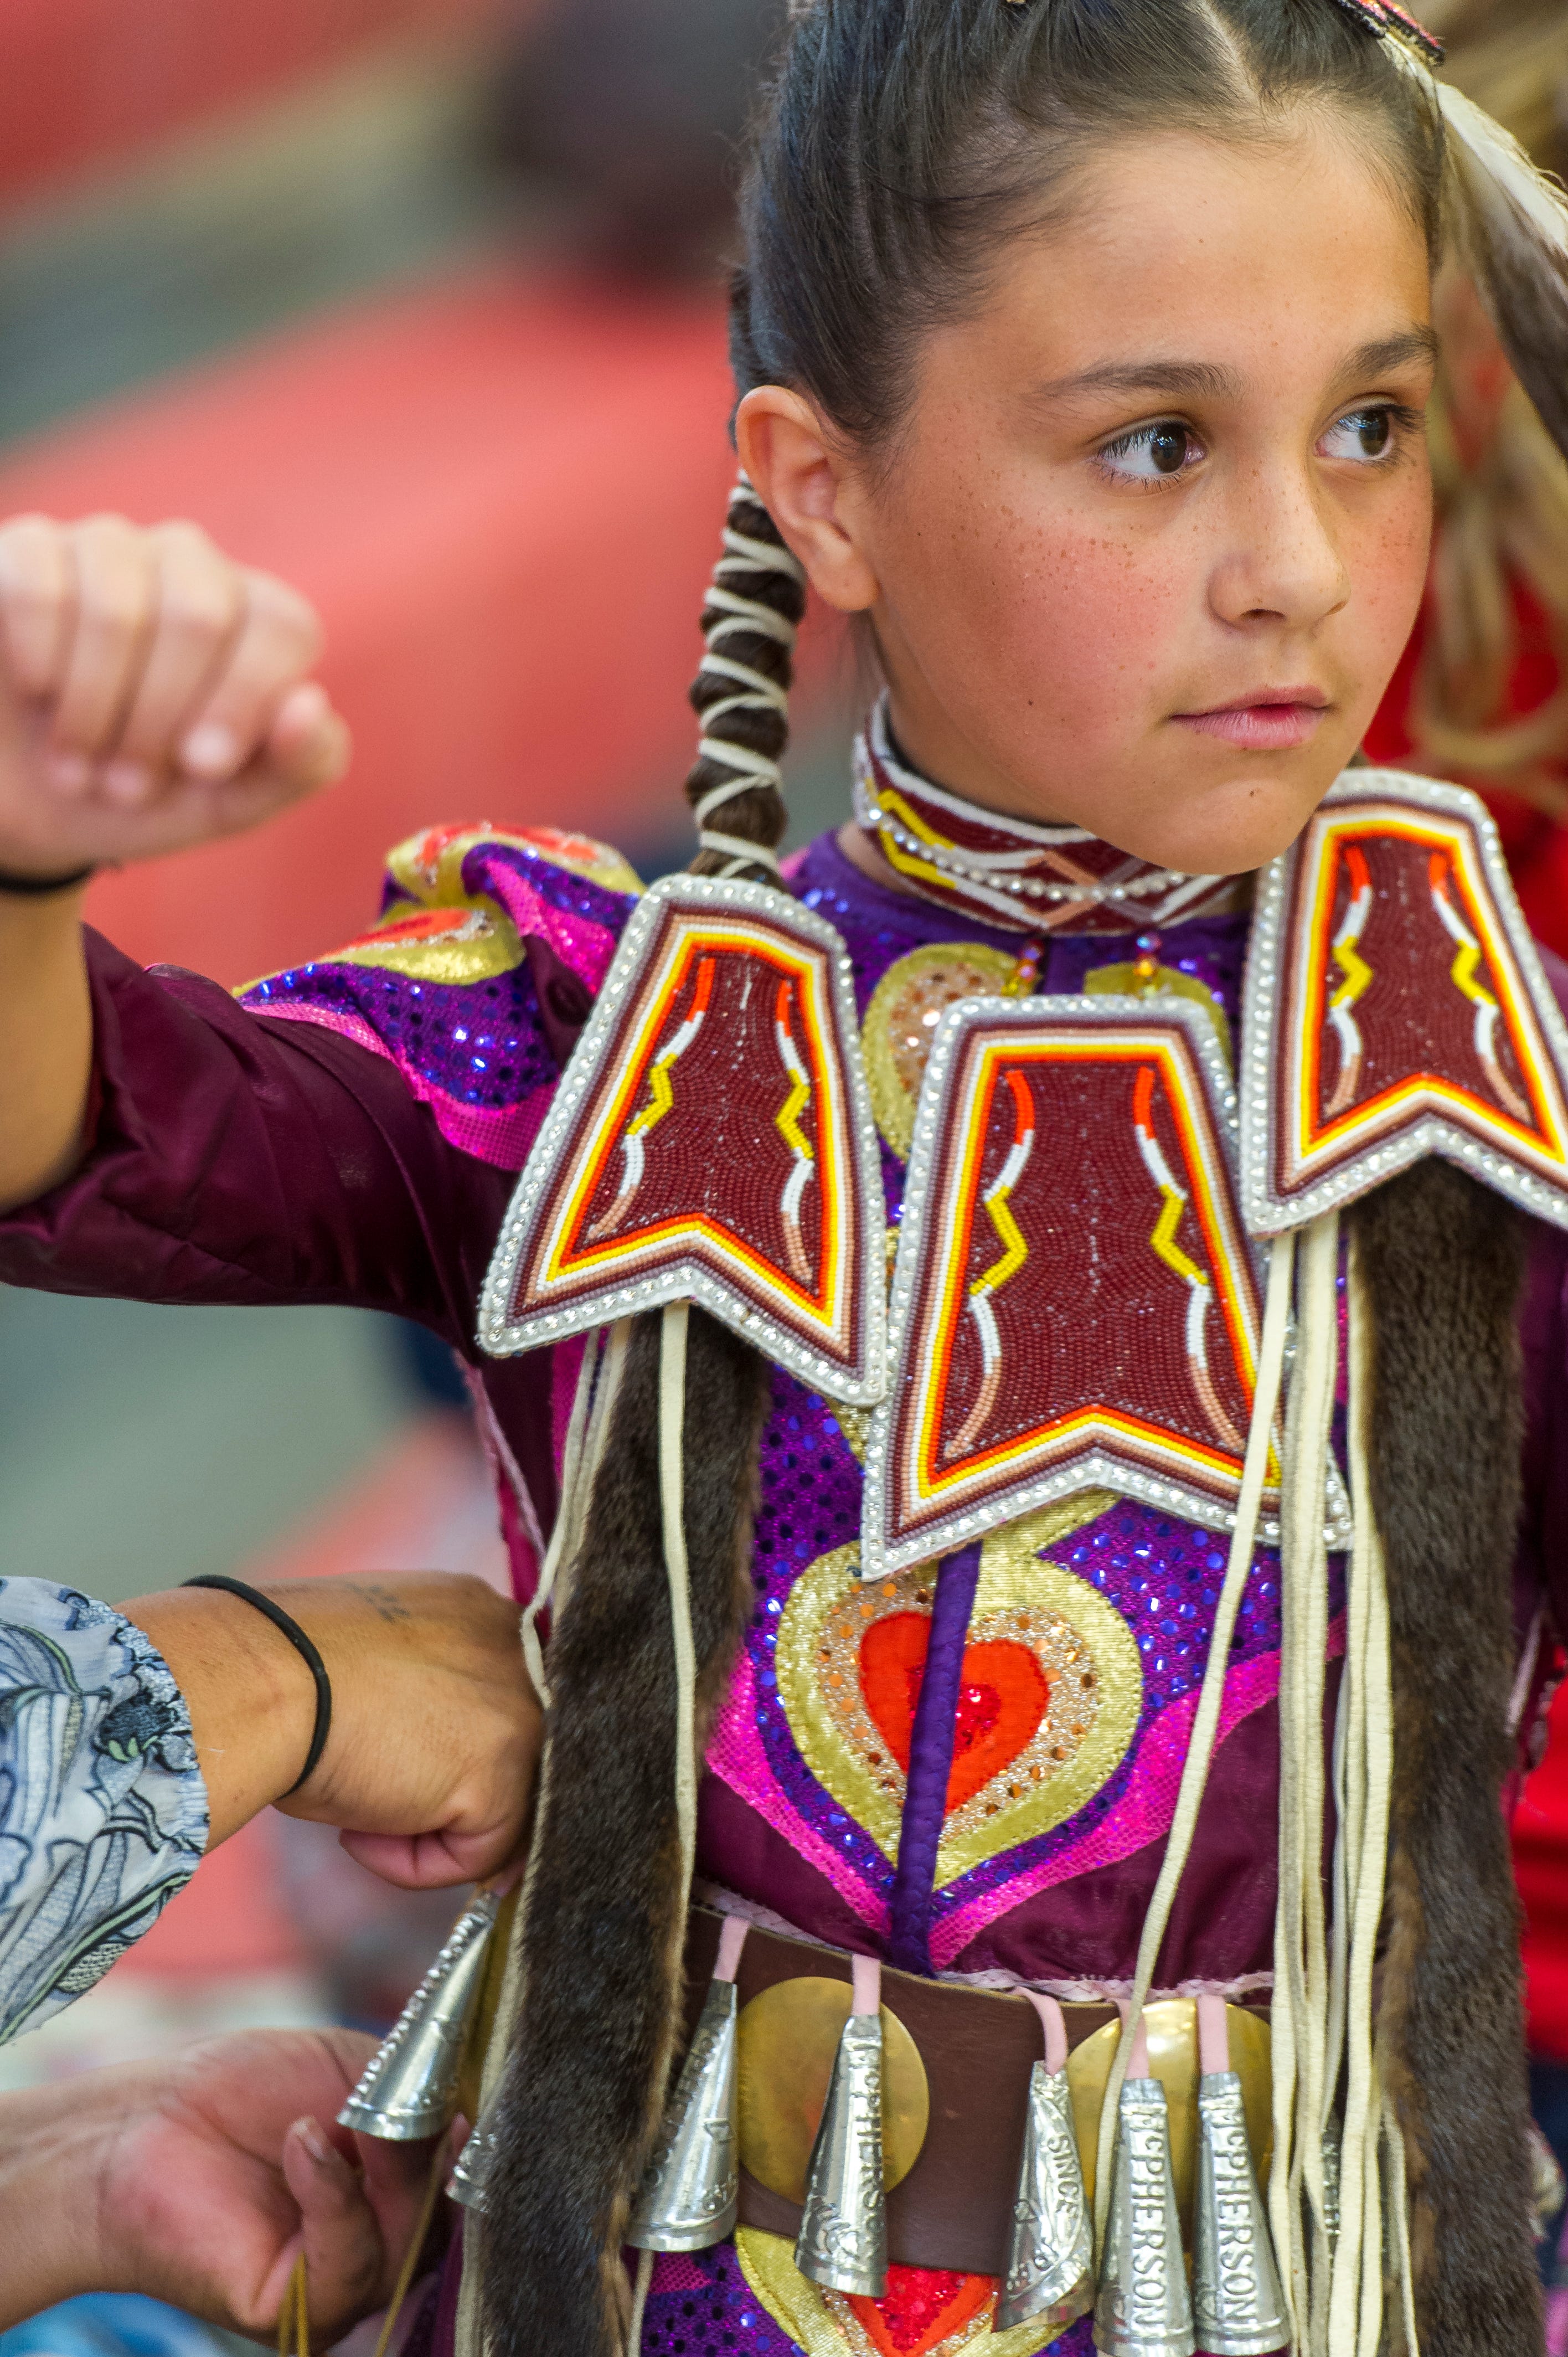 Paiute tribe, SUU group of Native American students host powwow – Utah